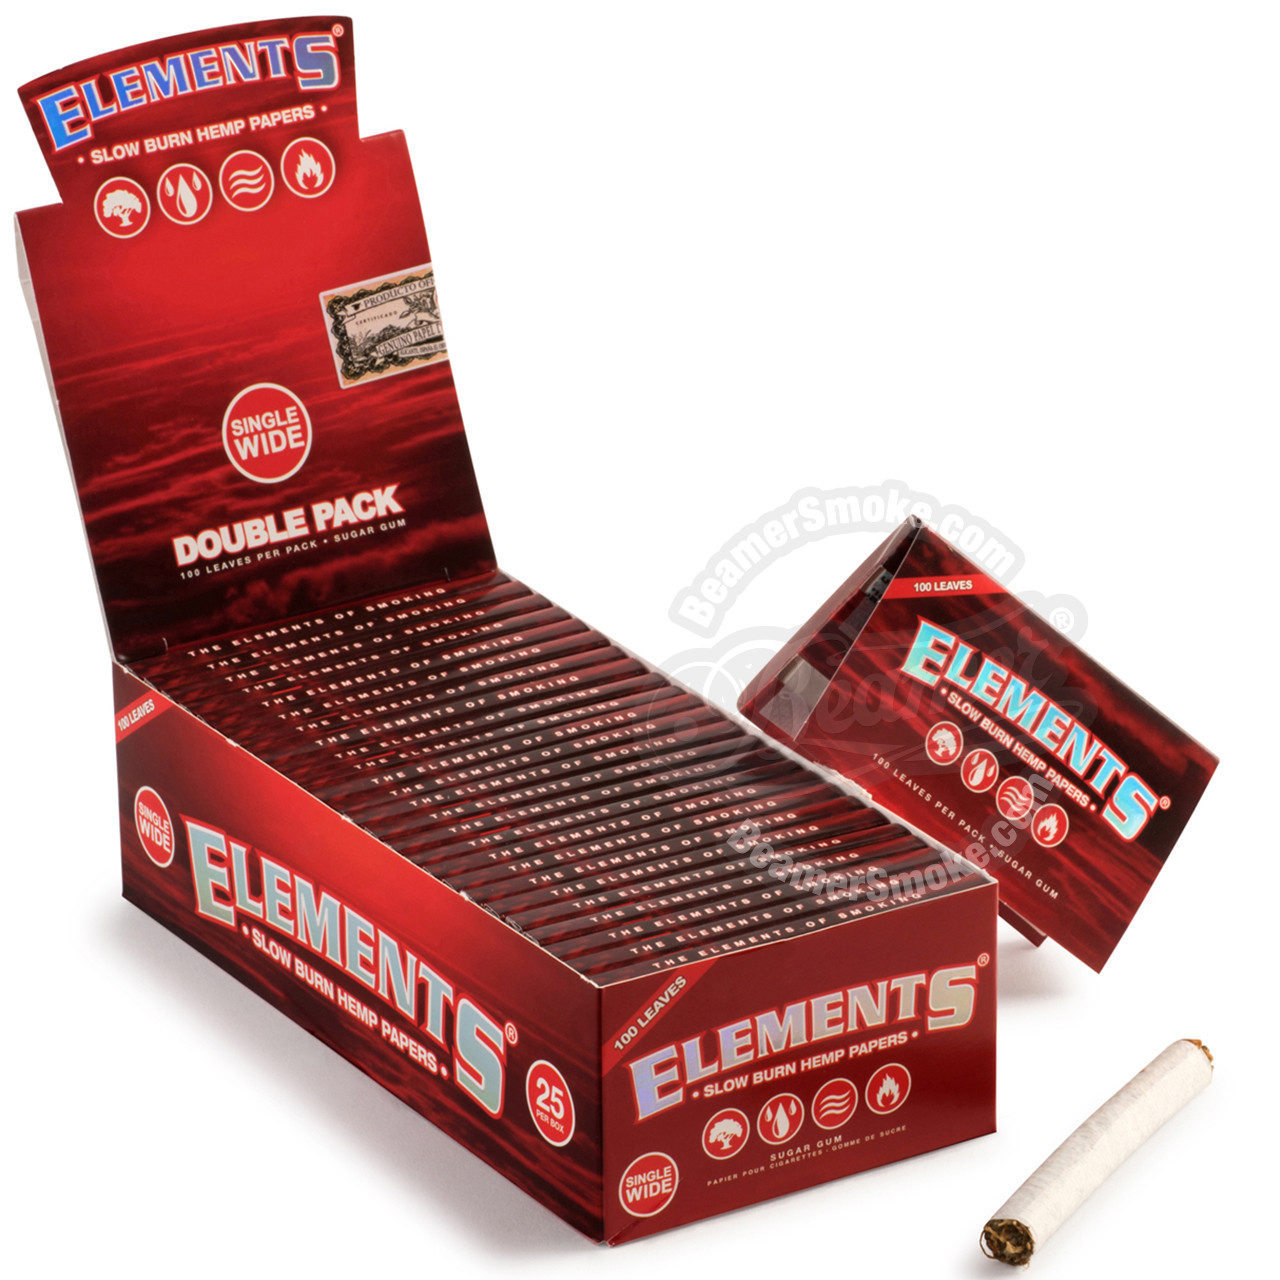 5X Packs Elements Slow Burn Hemp Single Wide Gummed Rolling Papers 100 Per Pack 